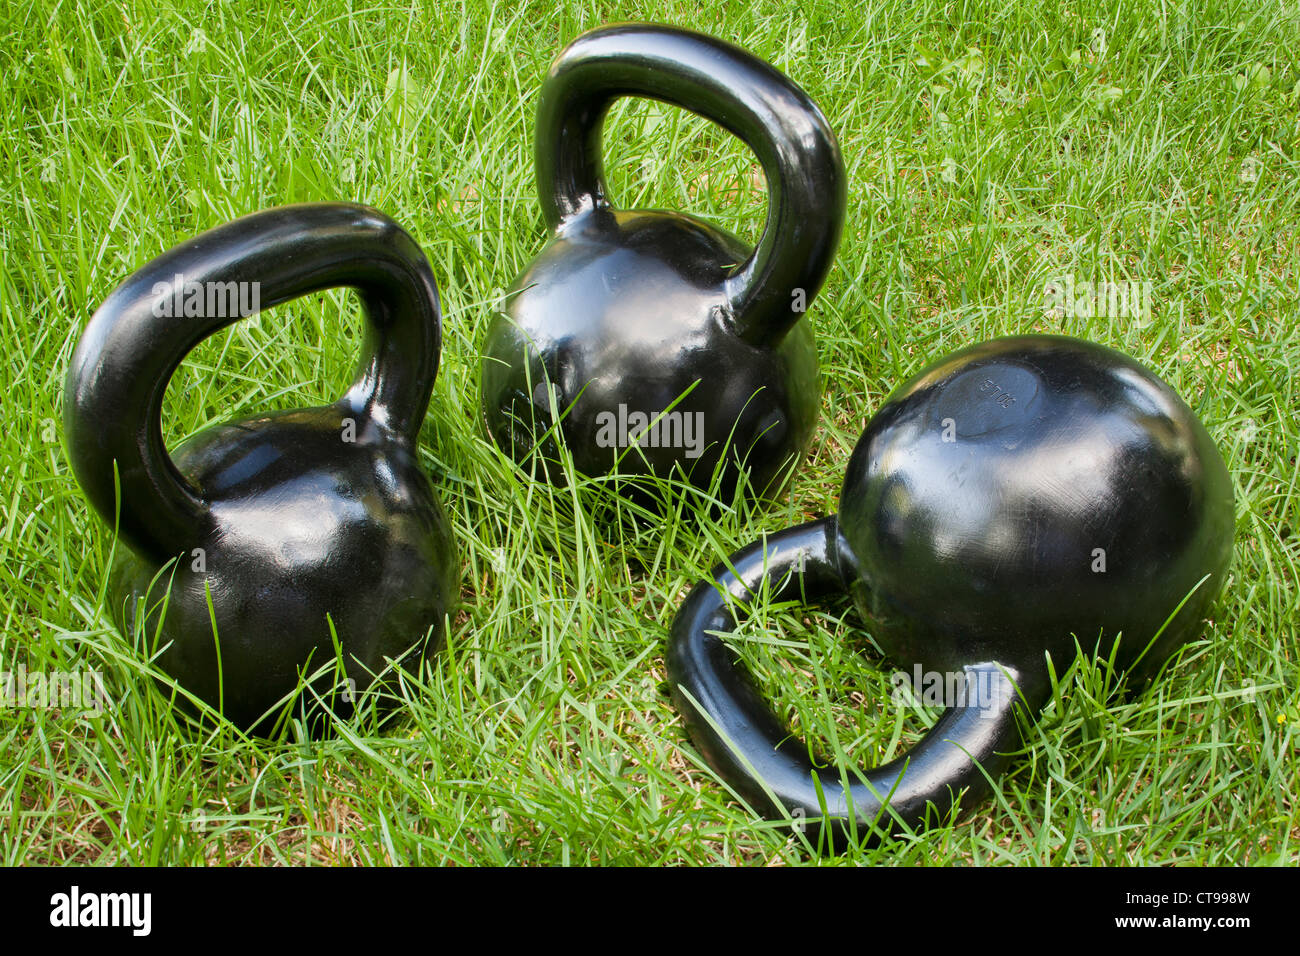 Tre pesante ferro kettlebells in erba verde - outdoor concept fitness Foto Stock